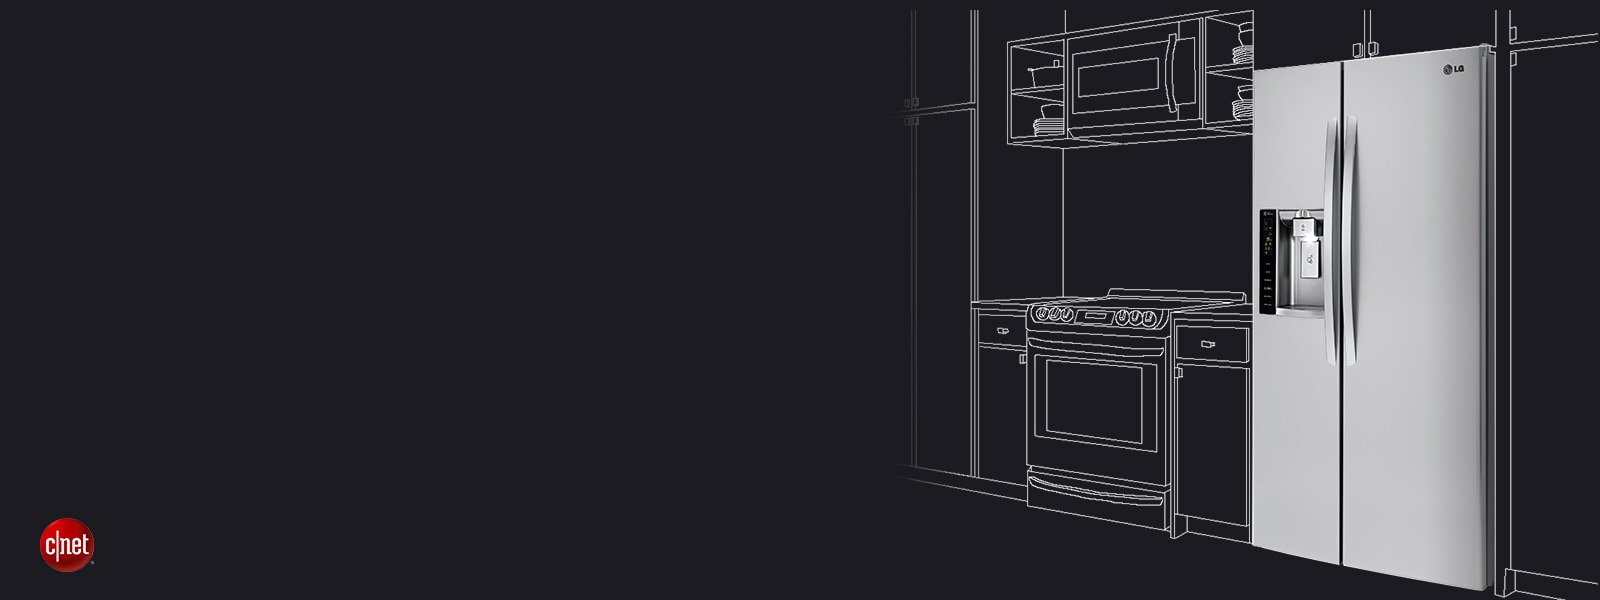 Lg Counter Depth Refrigerators With Large Capacity Lg Usa